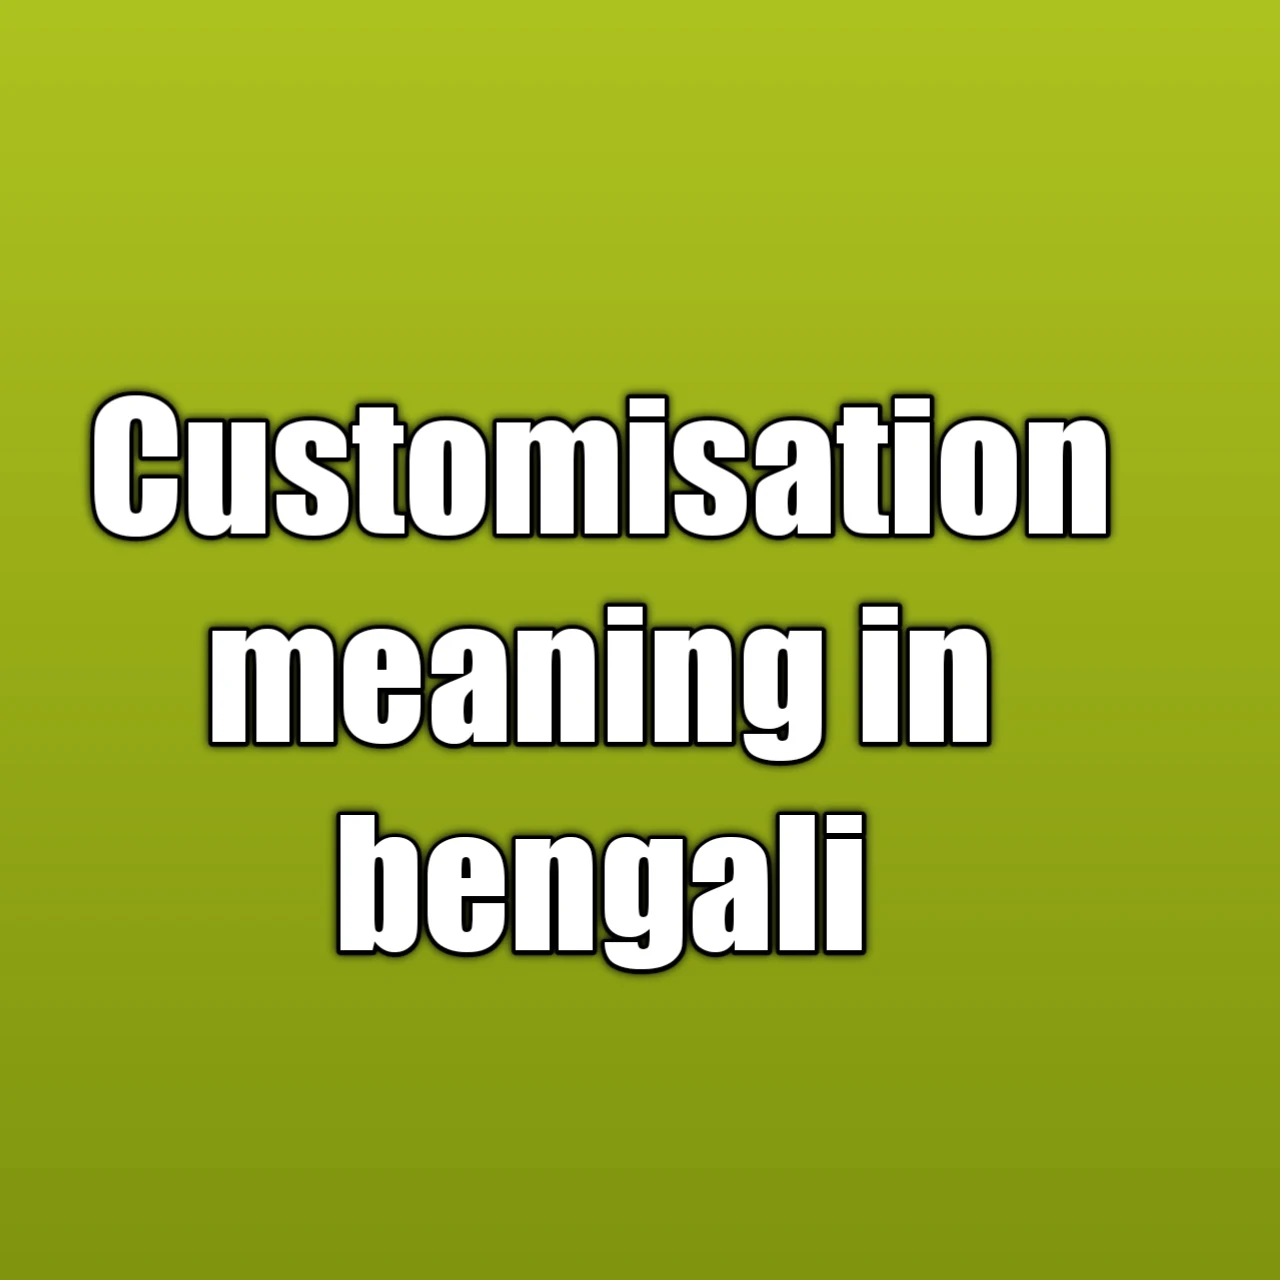 customisation meaning in bengali, customized meaning in bengali, customize meaning in bengali,,customization meaning in bengali, customise meaning in bengali, customized cake meaning in bengali, customized meaning, কাস্টোমাইজে মিনিং ইন বাঙ্গালী